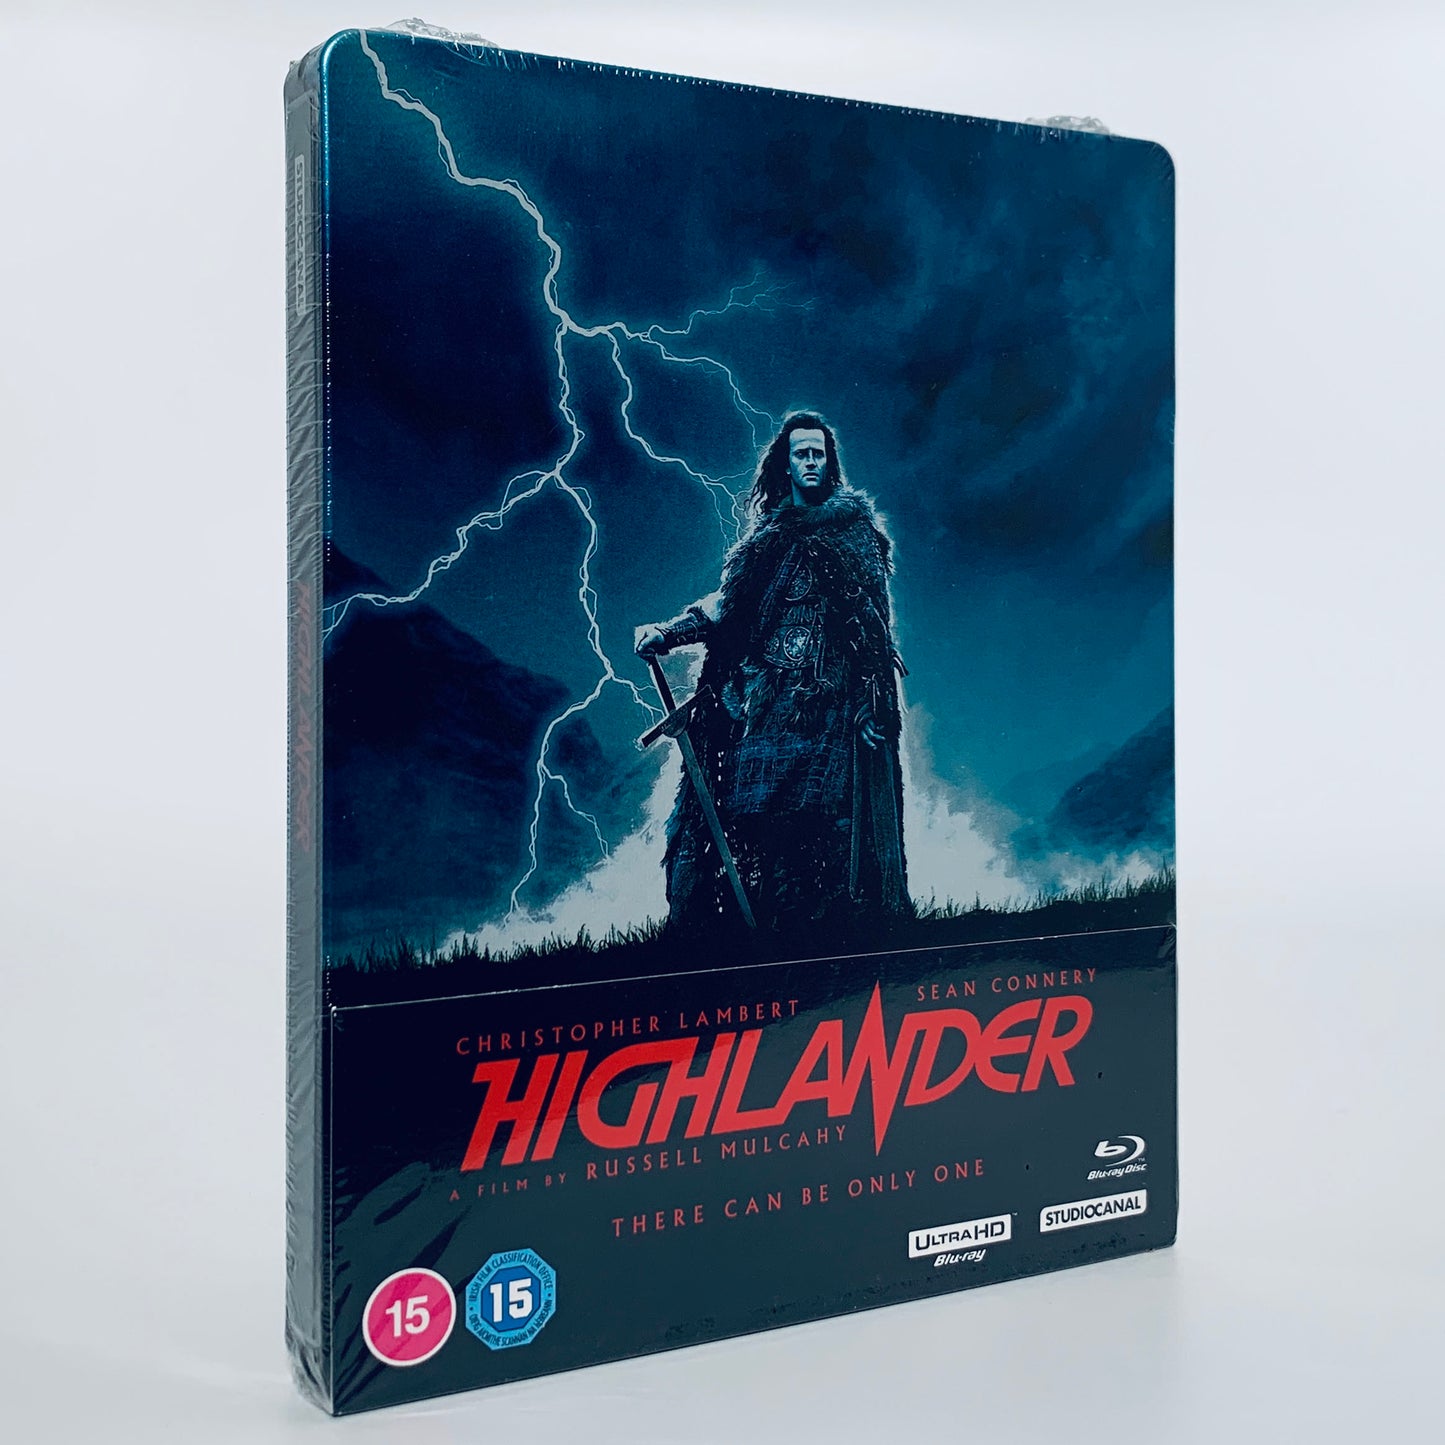 Highlander 1986 High Lander 4K Ultra HD Blu-ray Steel Book Studio Canal